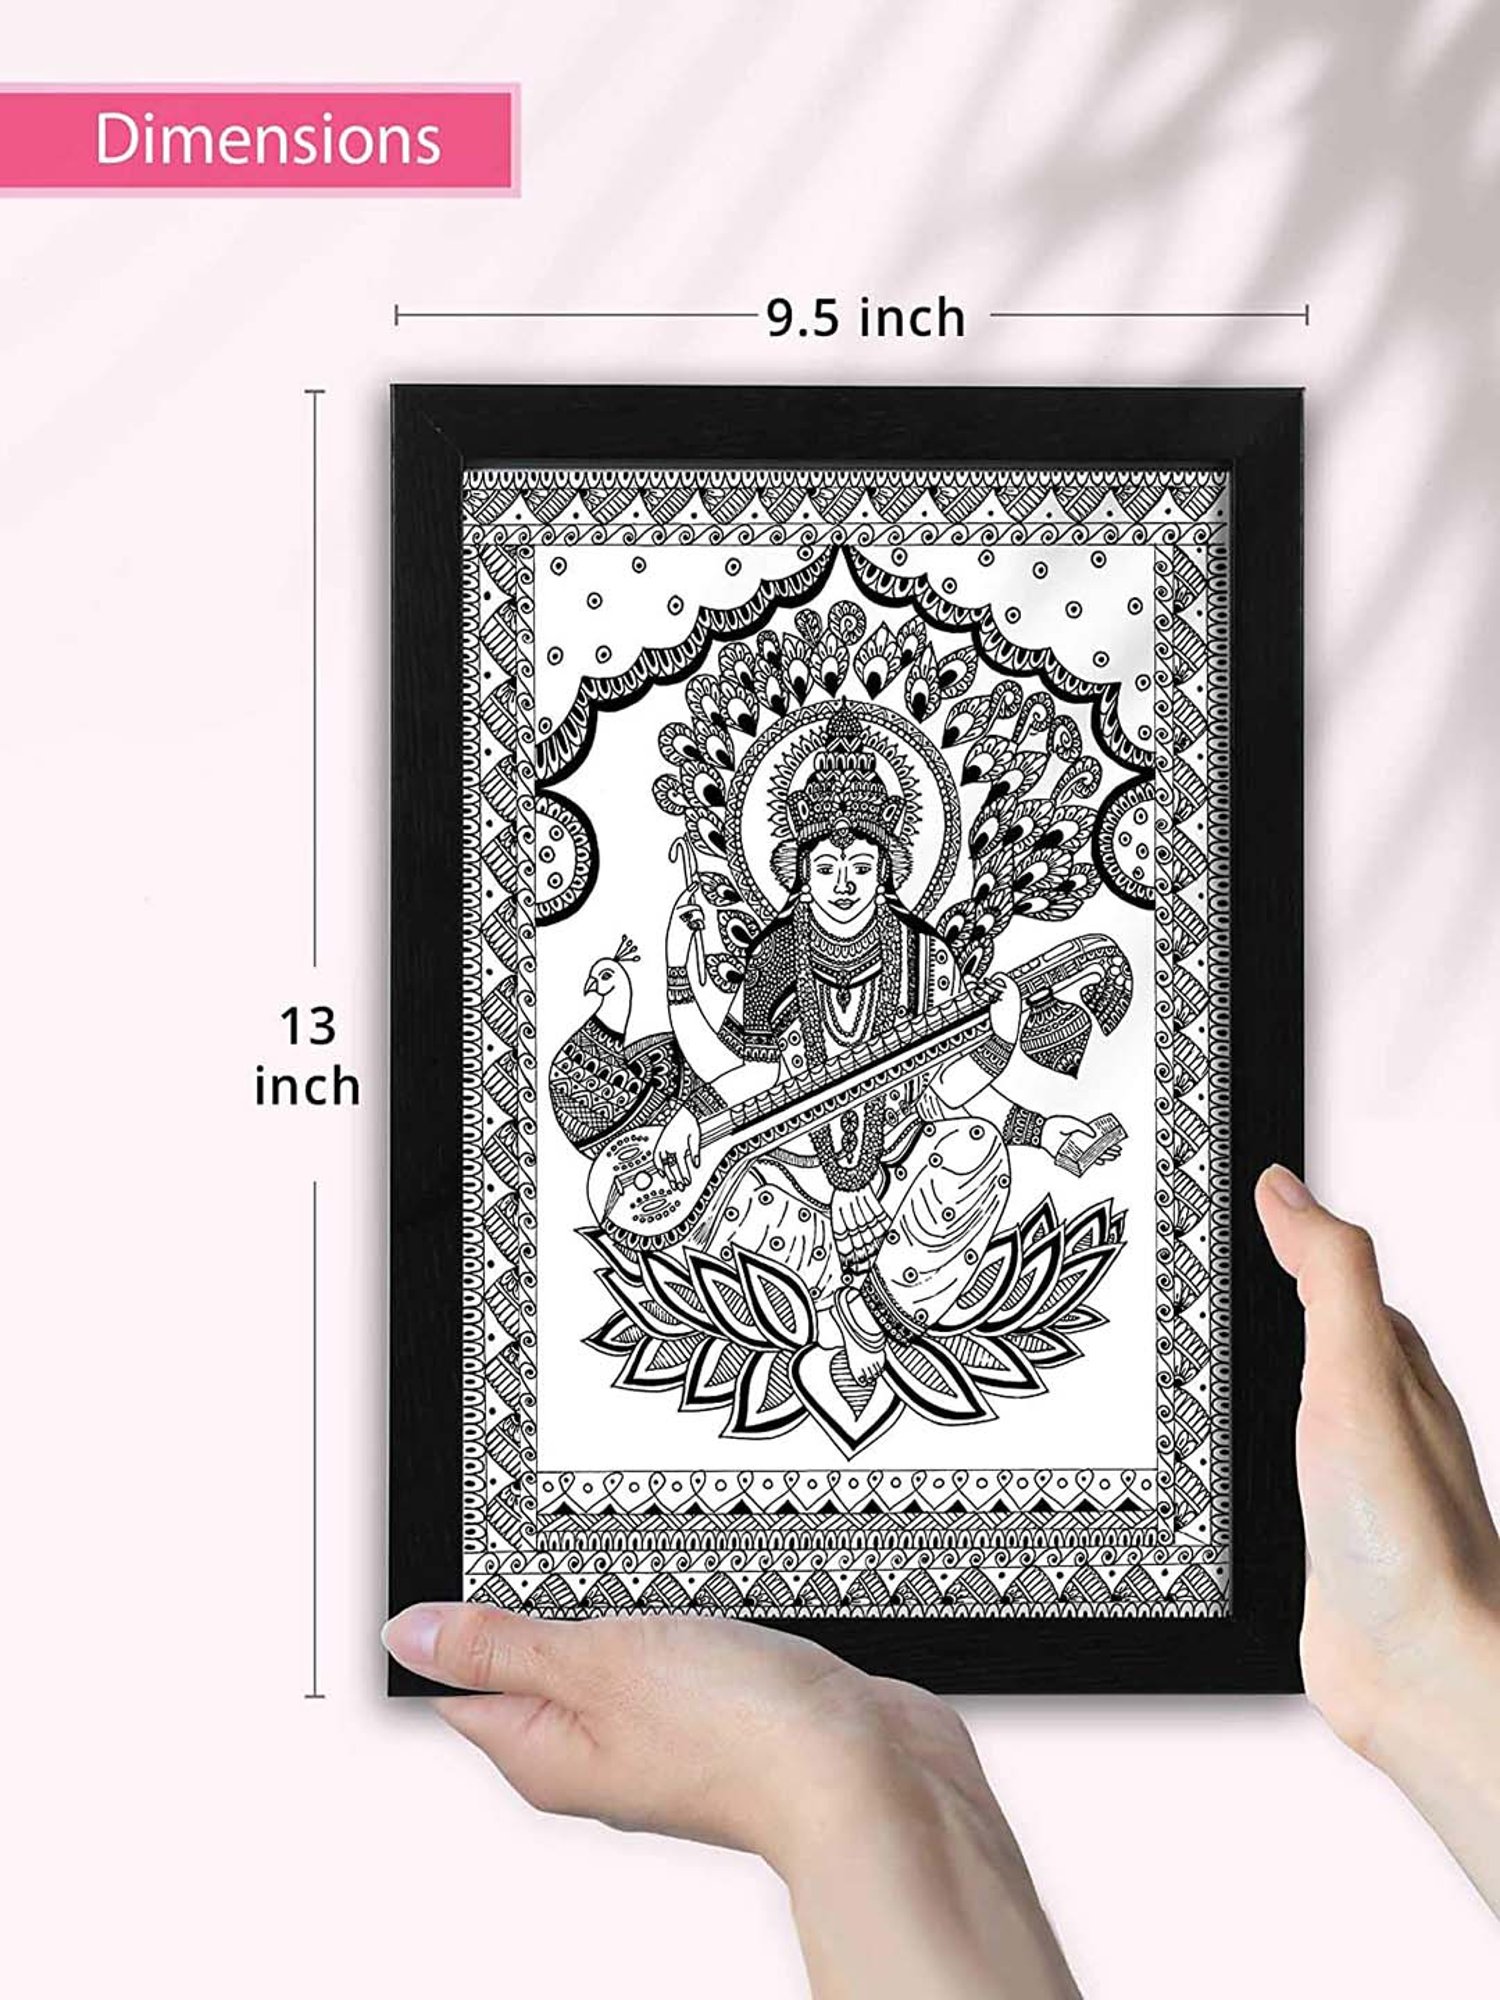 Share more than 72 saraswati goddess drawing best - xkldase.edu.vn